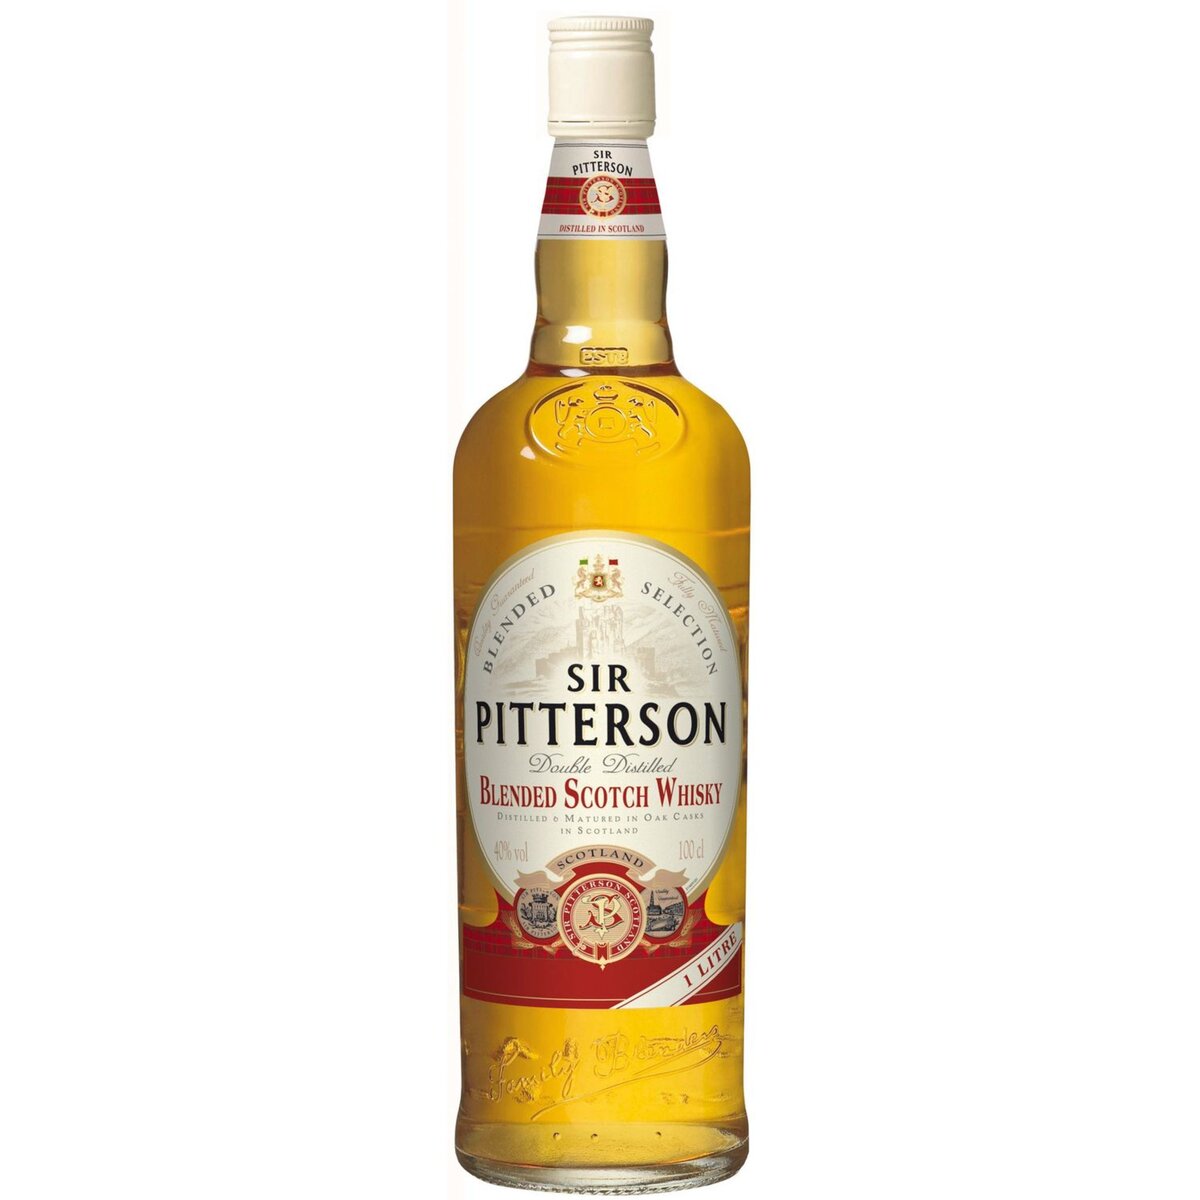 Sir pitterson scotch whisky 40° - 1l